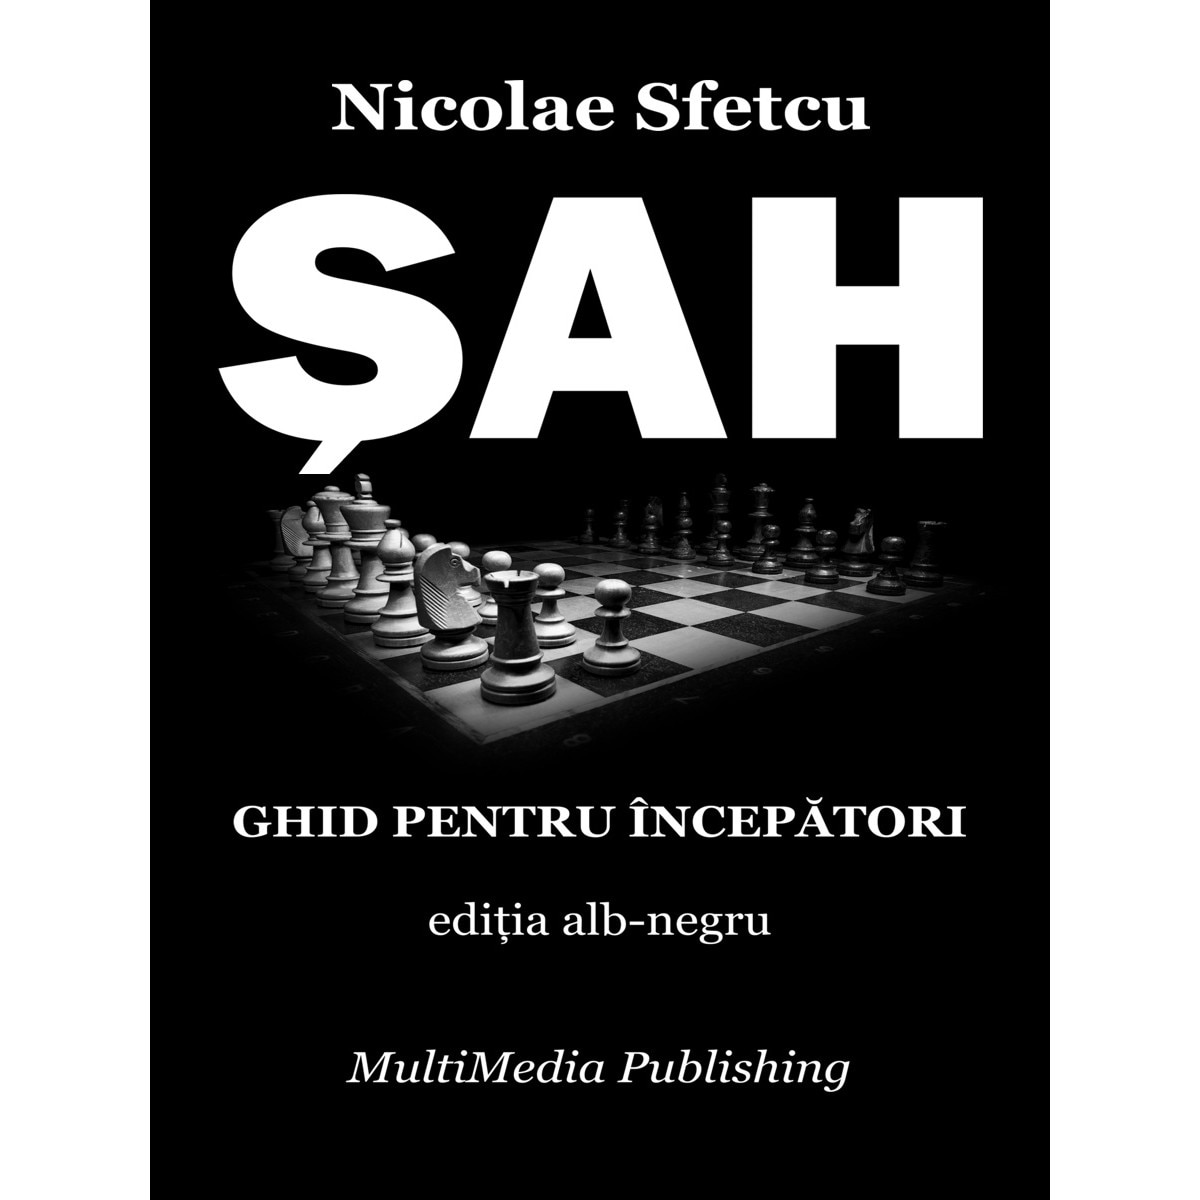 PDF) The Game of Chess  Nicolae Sfetcu 